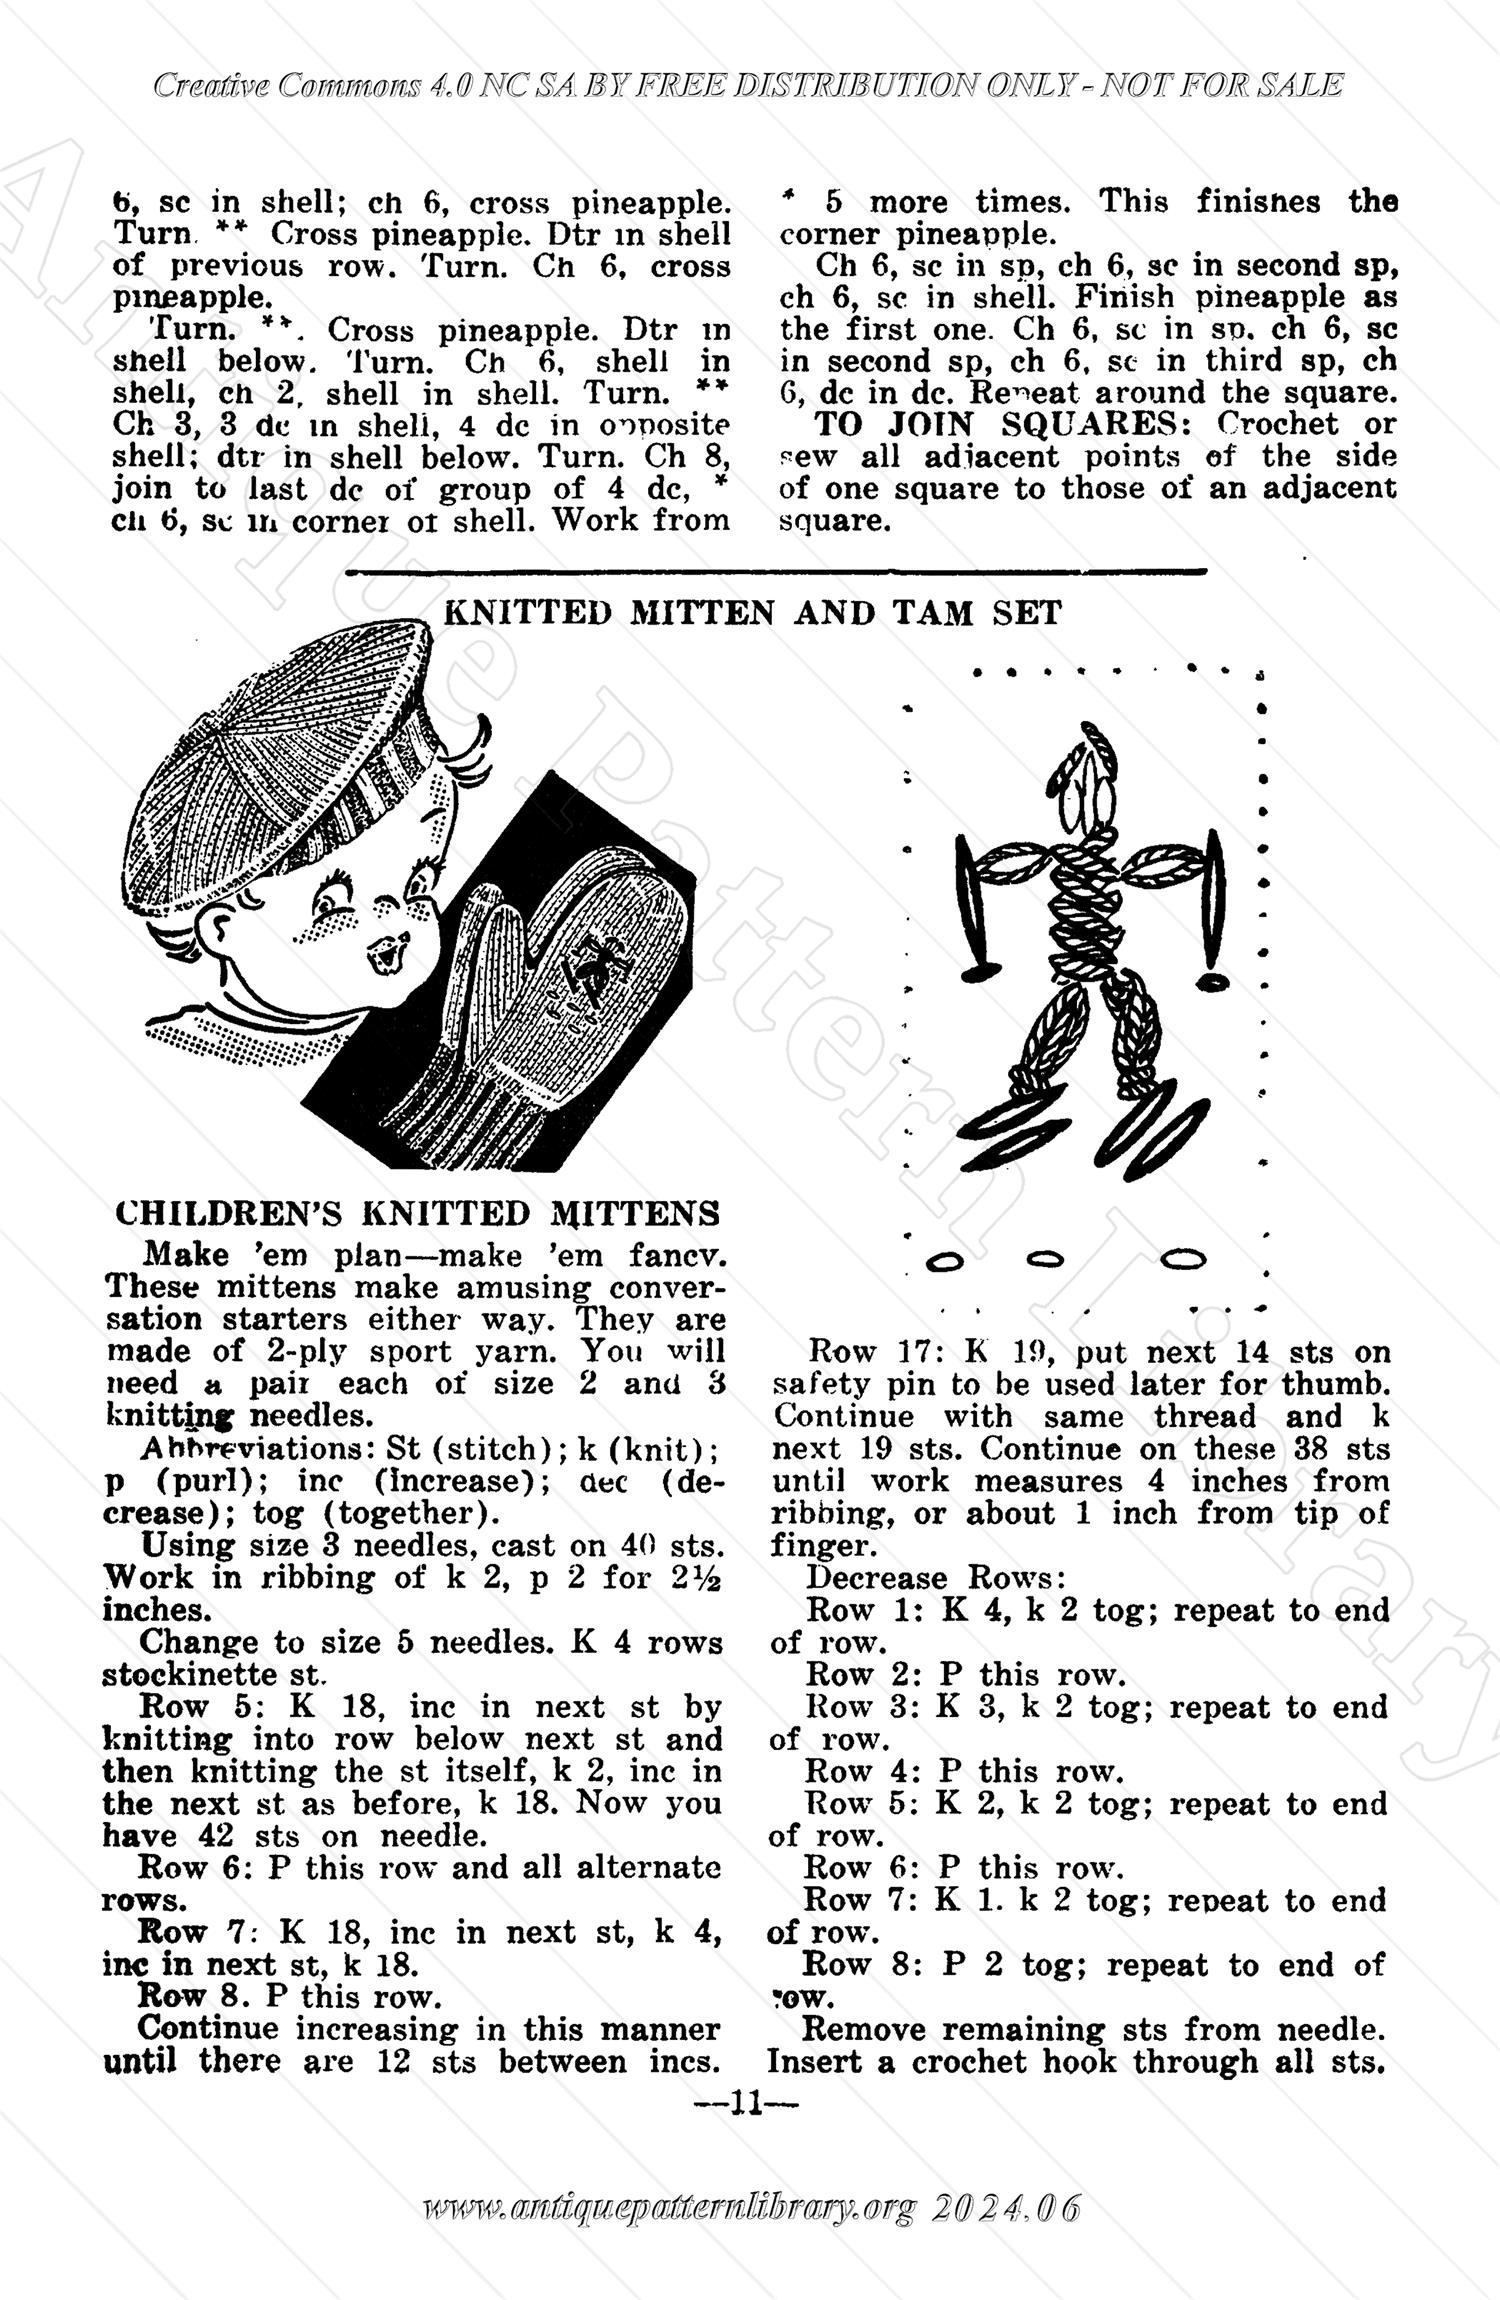 I-WB132 The Workbasket Vol. 13 November 1948 No. 2